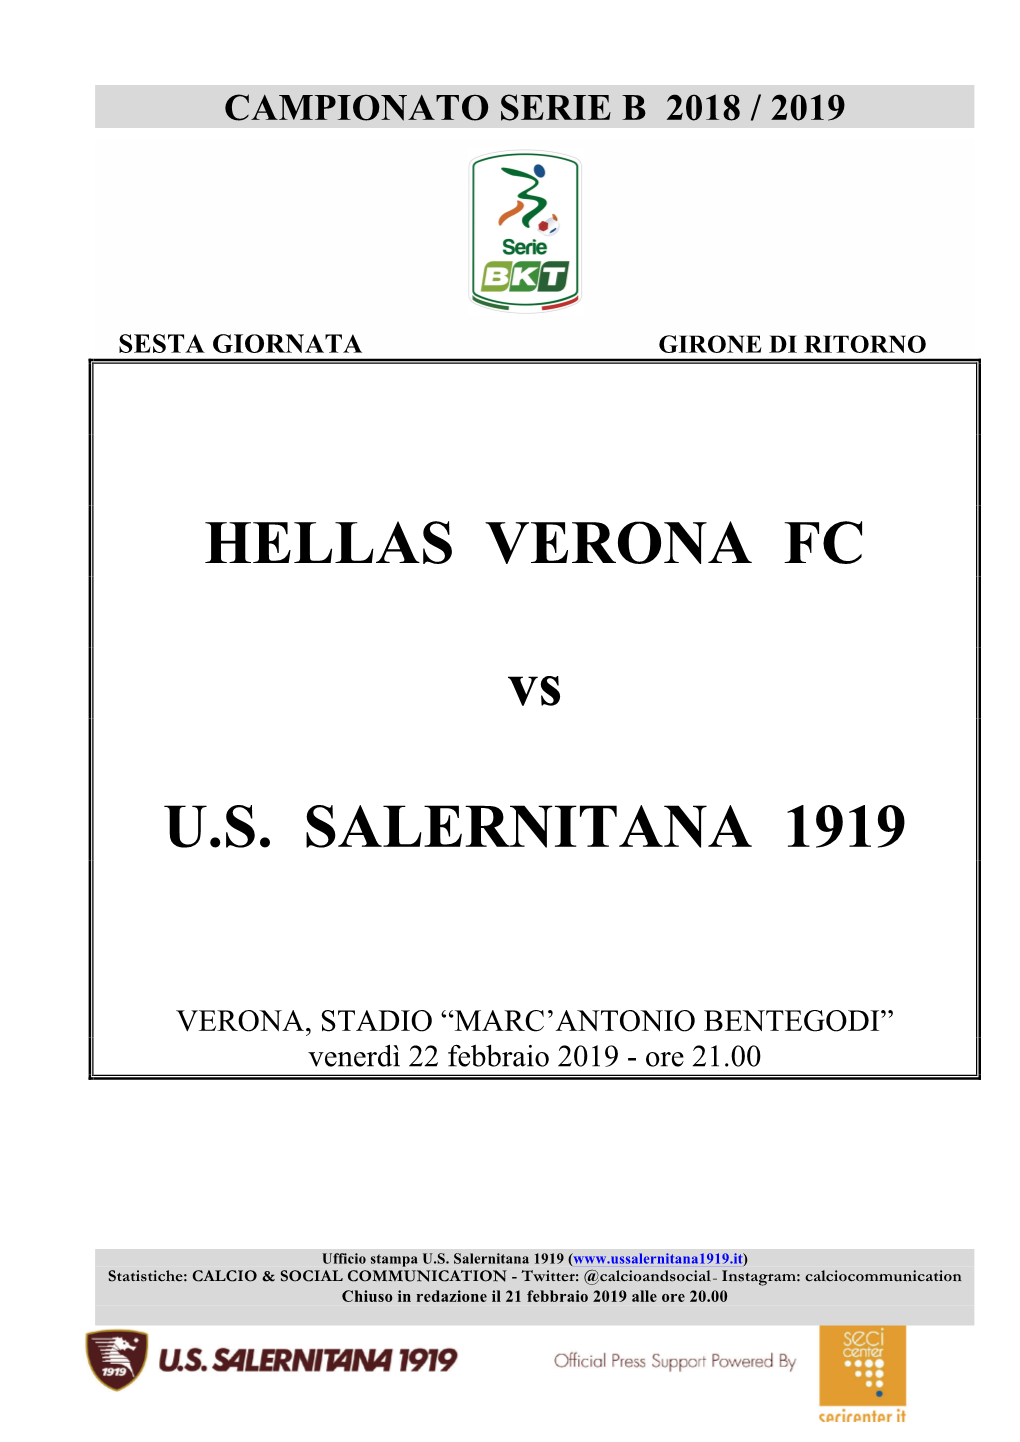 HELLAS VERONA FC Vs U.S. SALERNITANA 1919